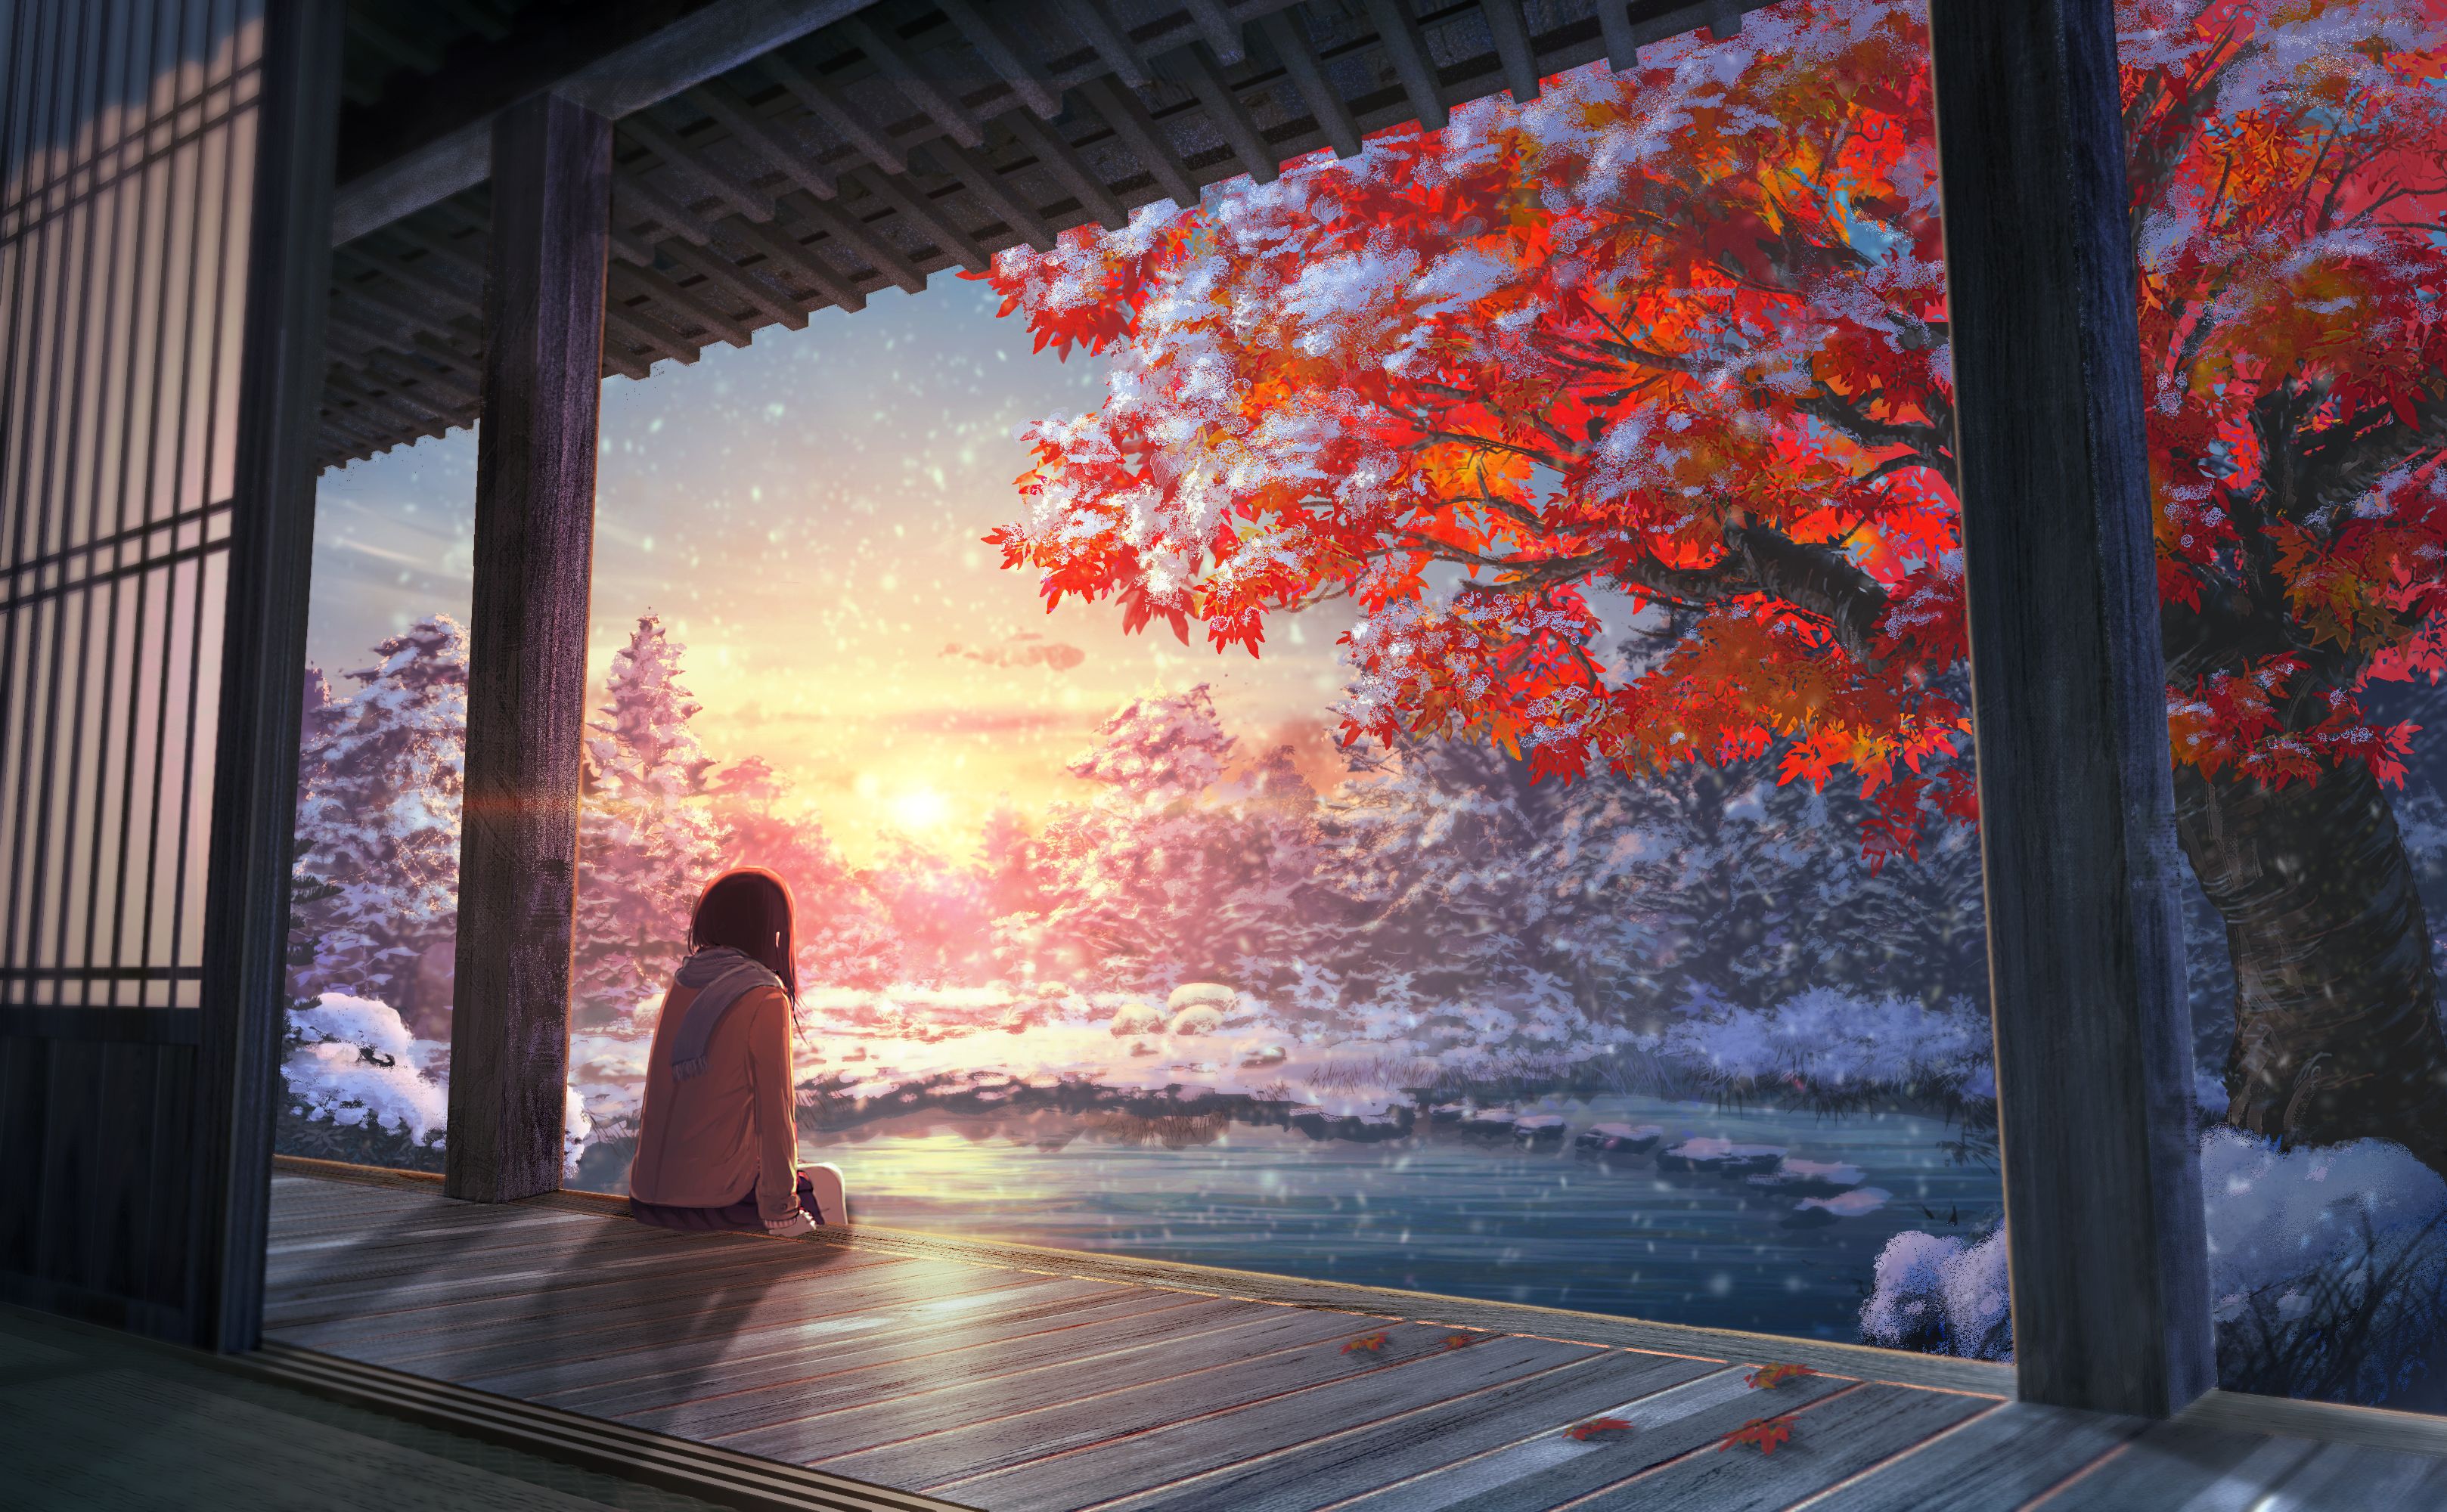 Winter Calm Anime Girls Sunset Artwork Snow Anime 3236x2000 UHD Wallpaper. Walldump HD and UHD Wallpaper